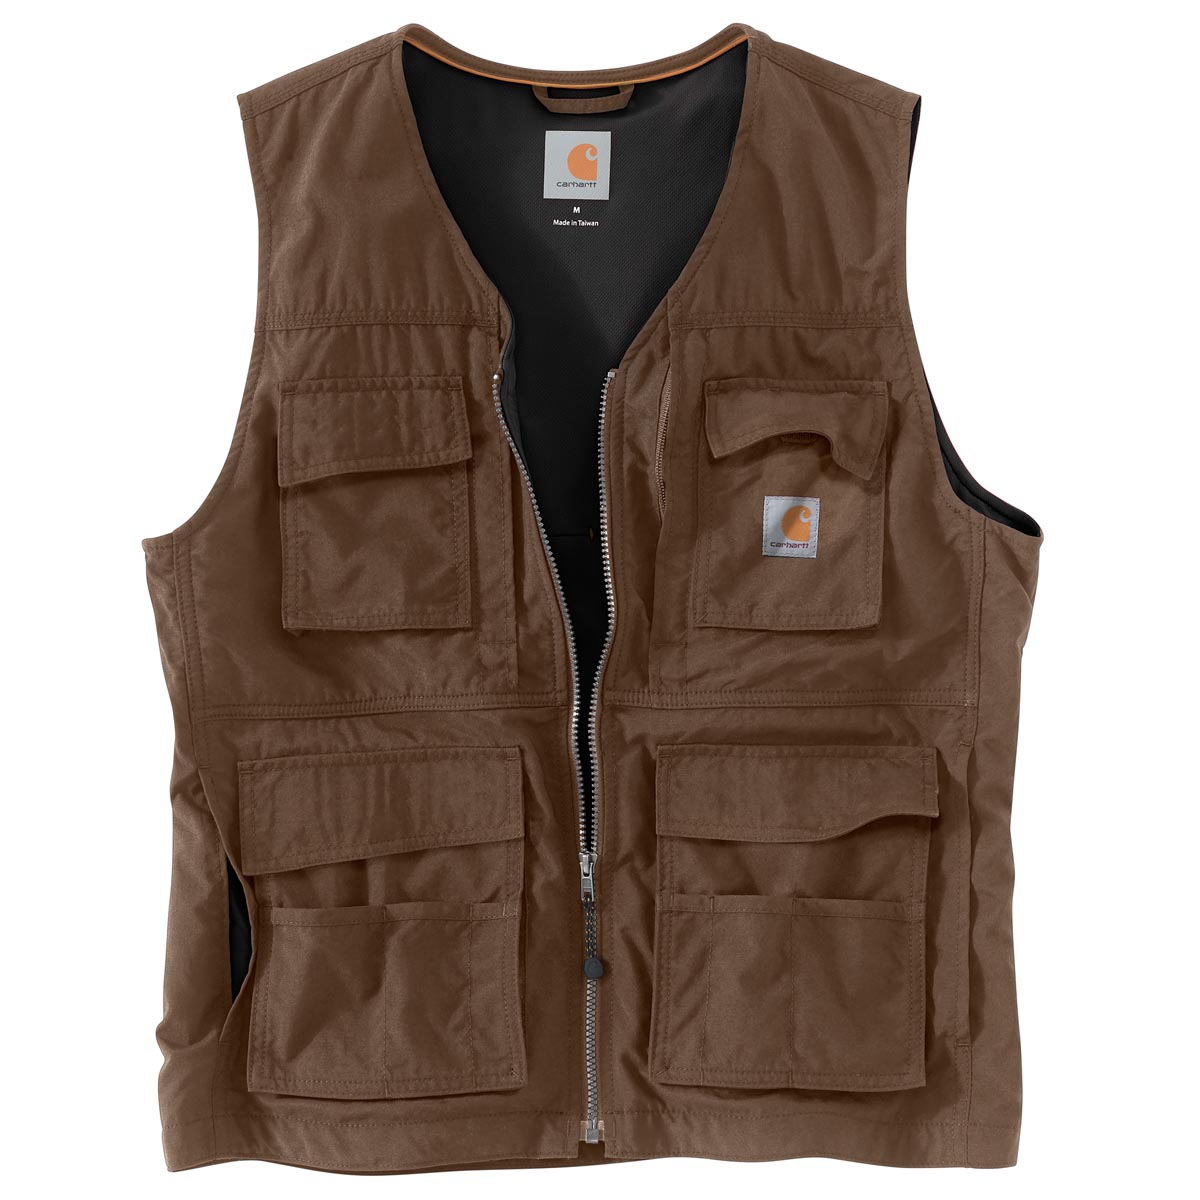 Carhartt Men's Briscoe Vest Discontinued Pricing